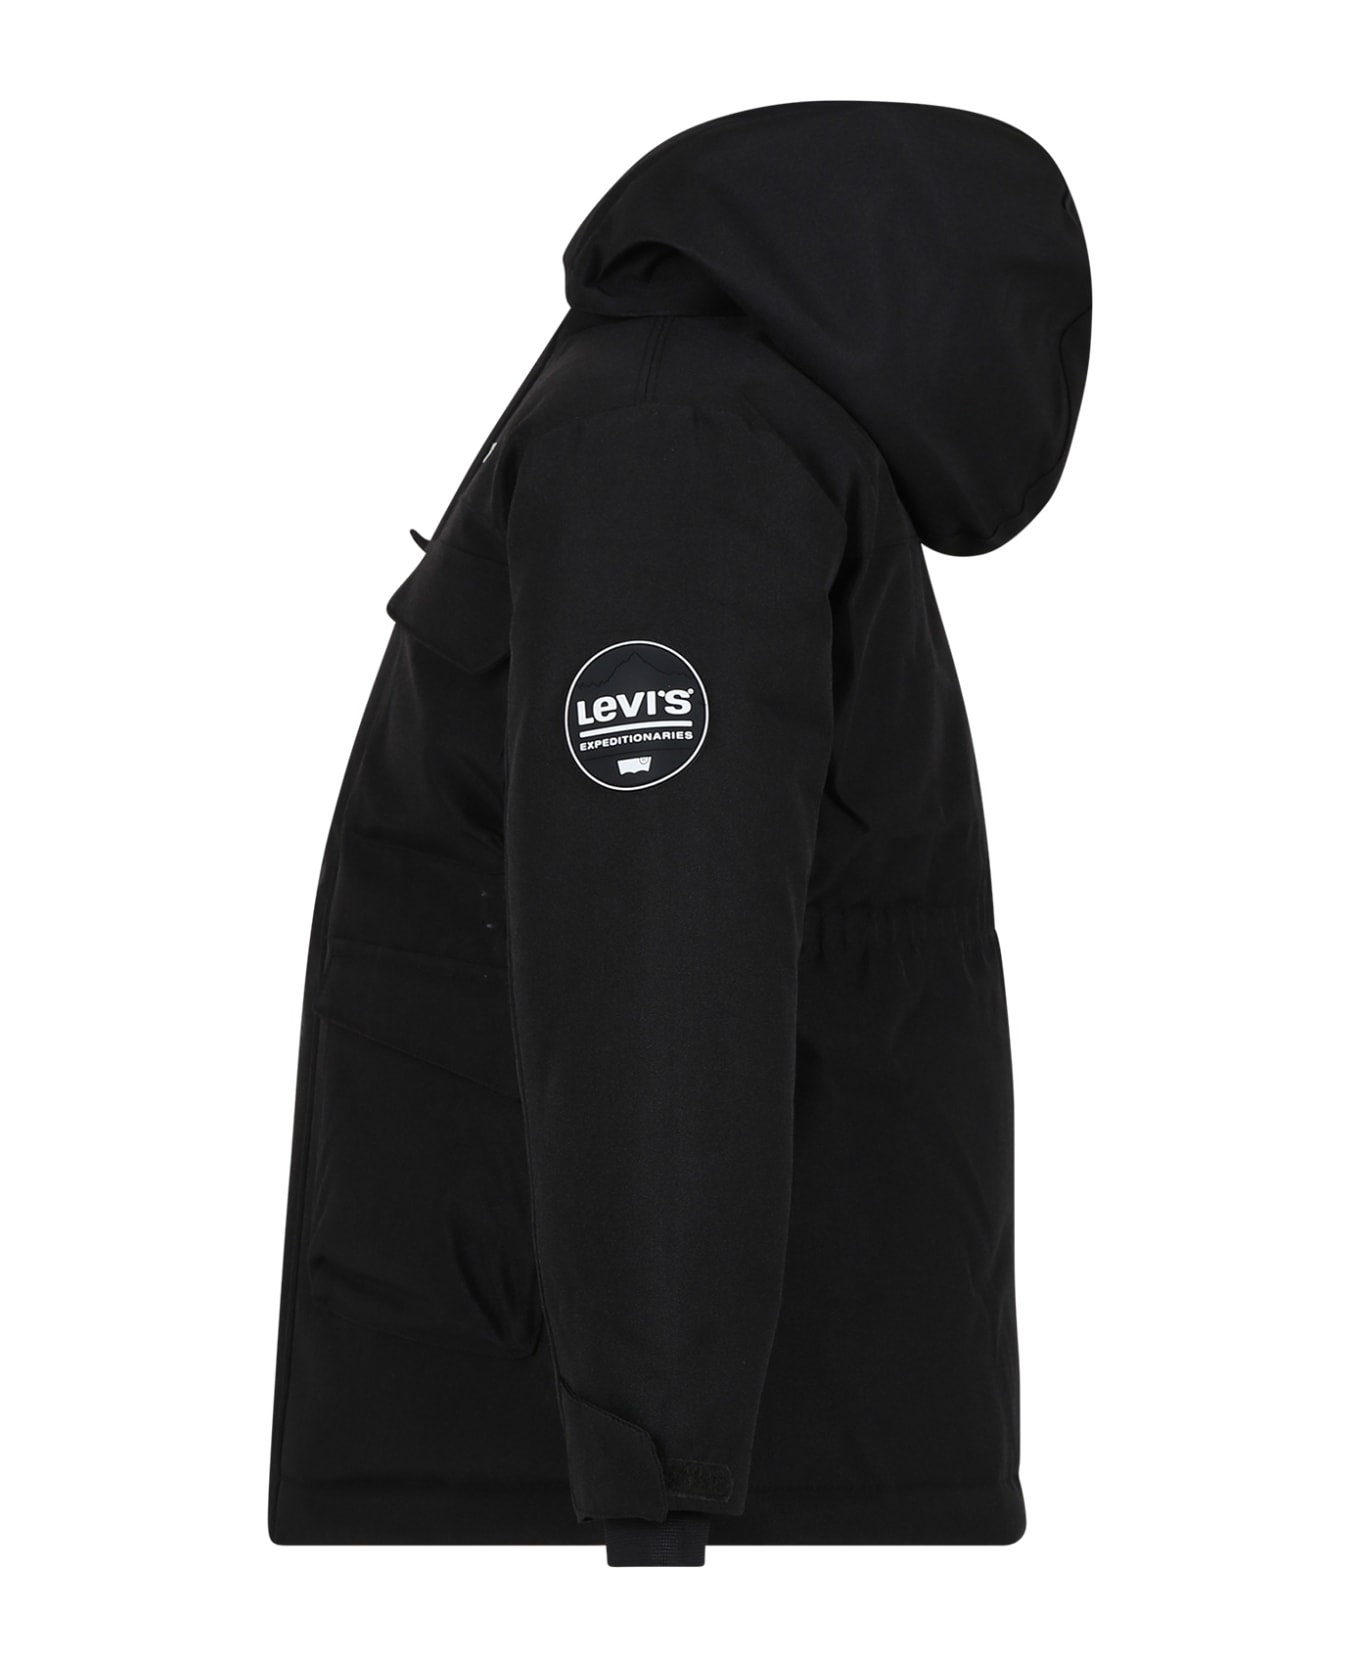 Levi's Black Jacket For Boy With Logo - Black